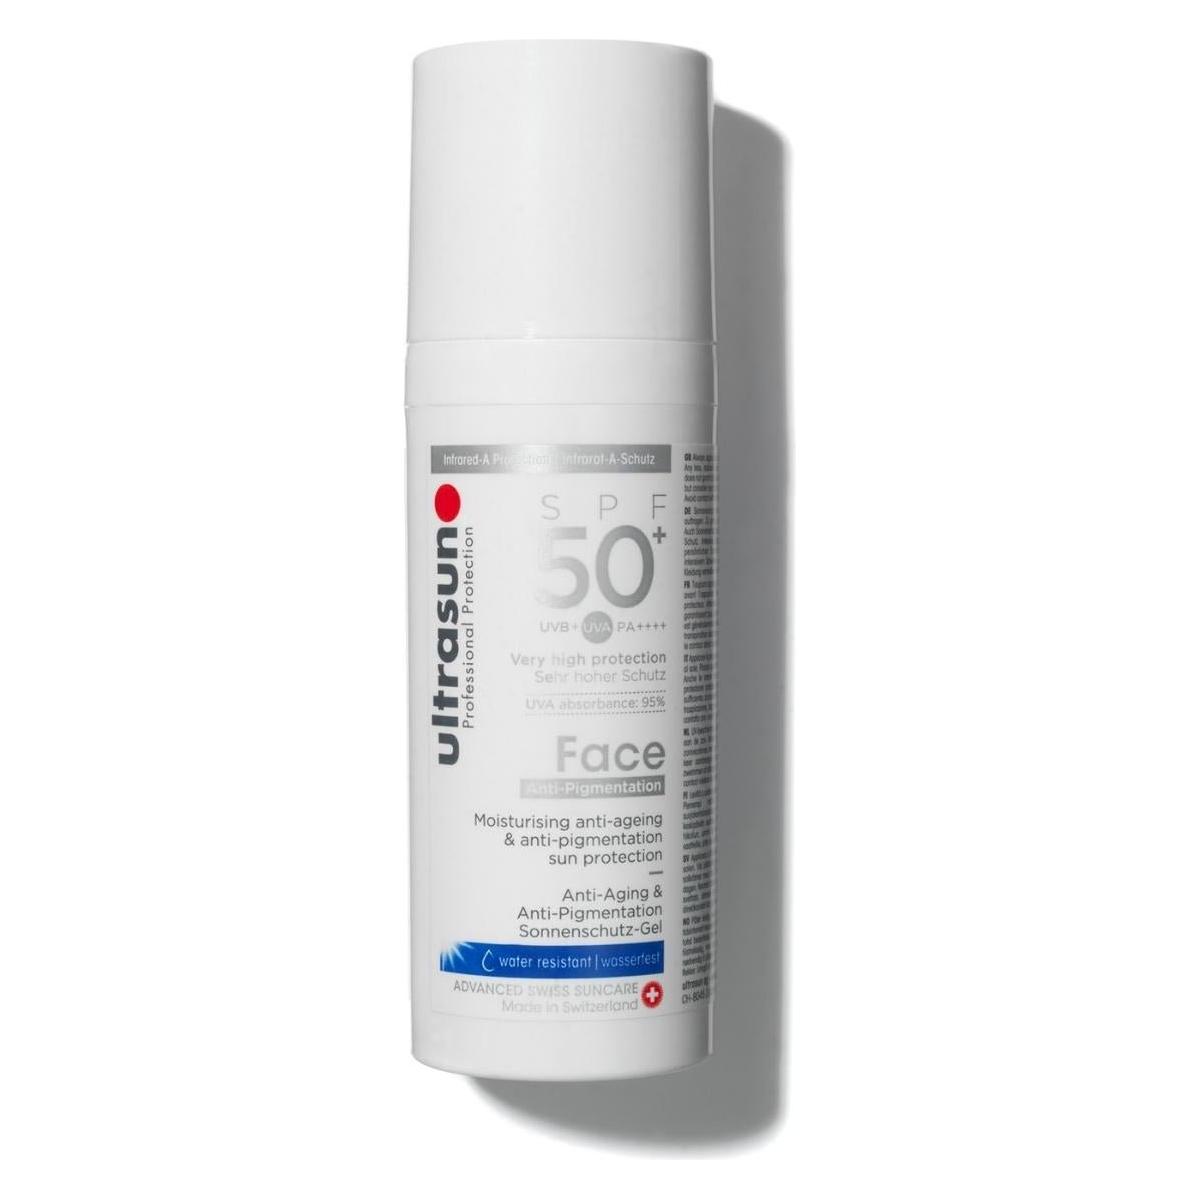 Ultrasun | Face Anti-Pigmentation SPF50+ - DG International Ventures Limited